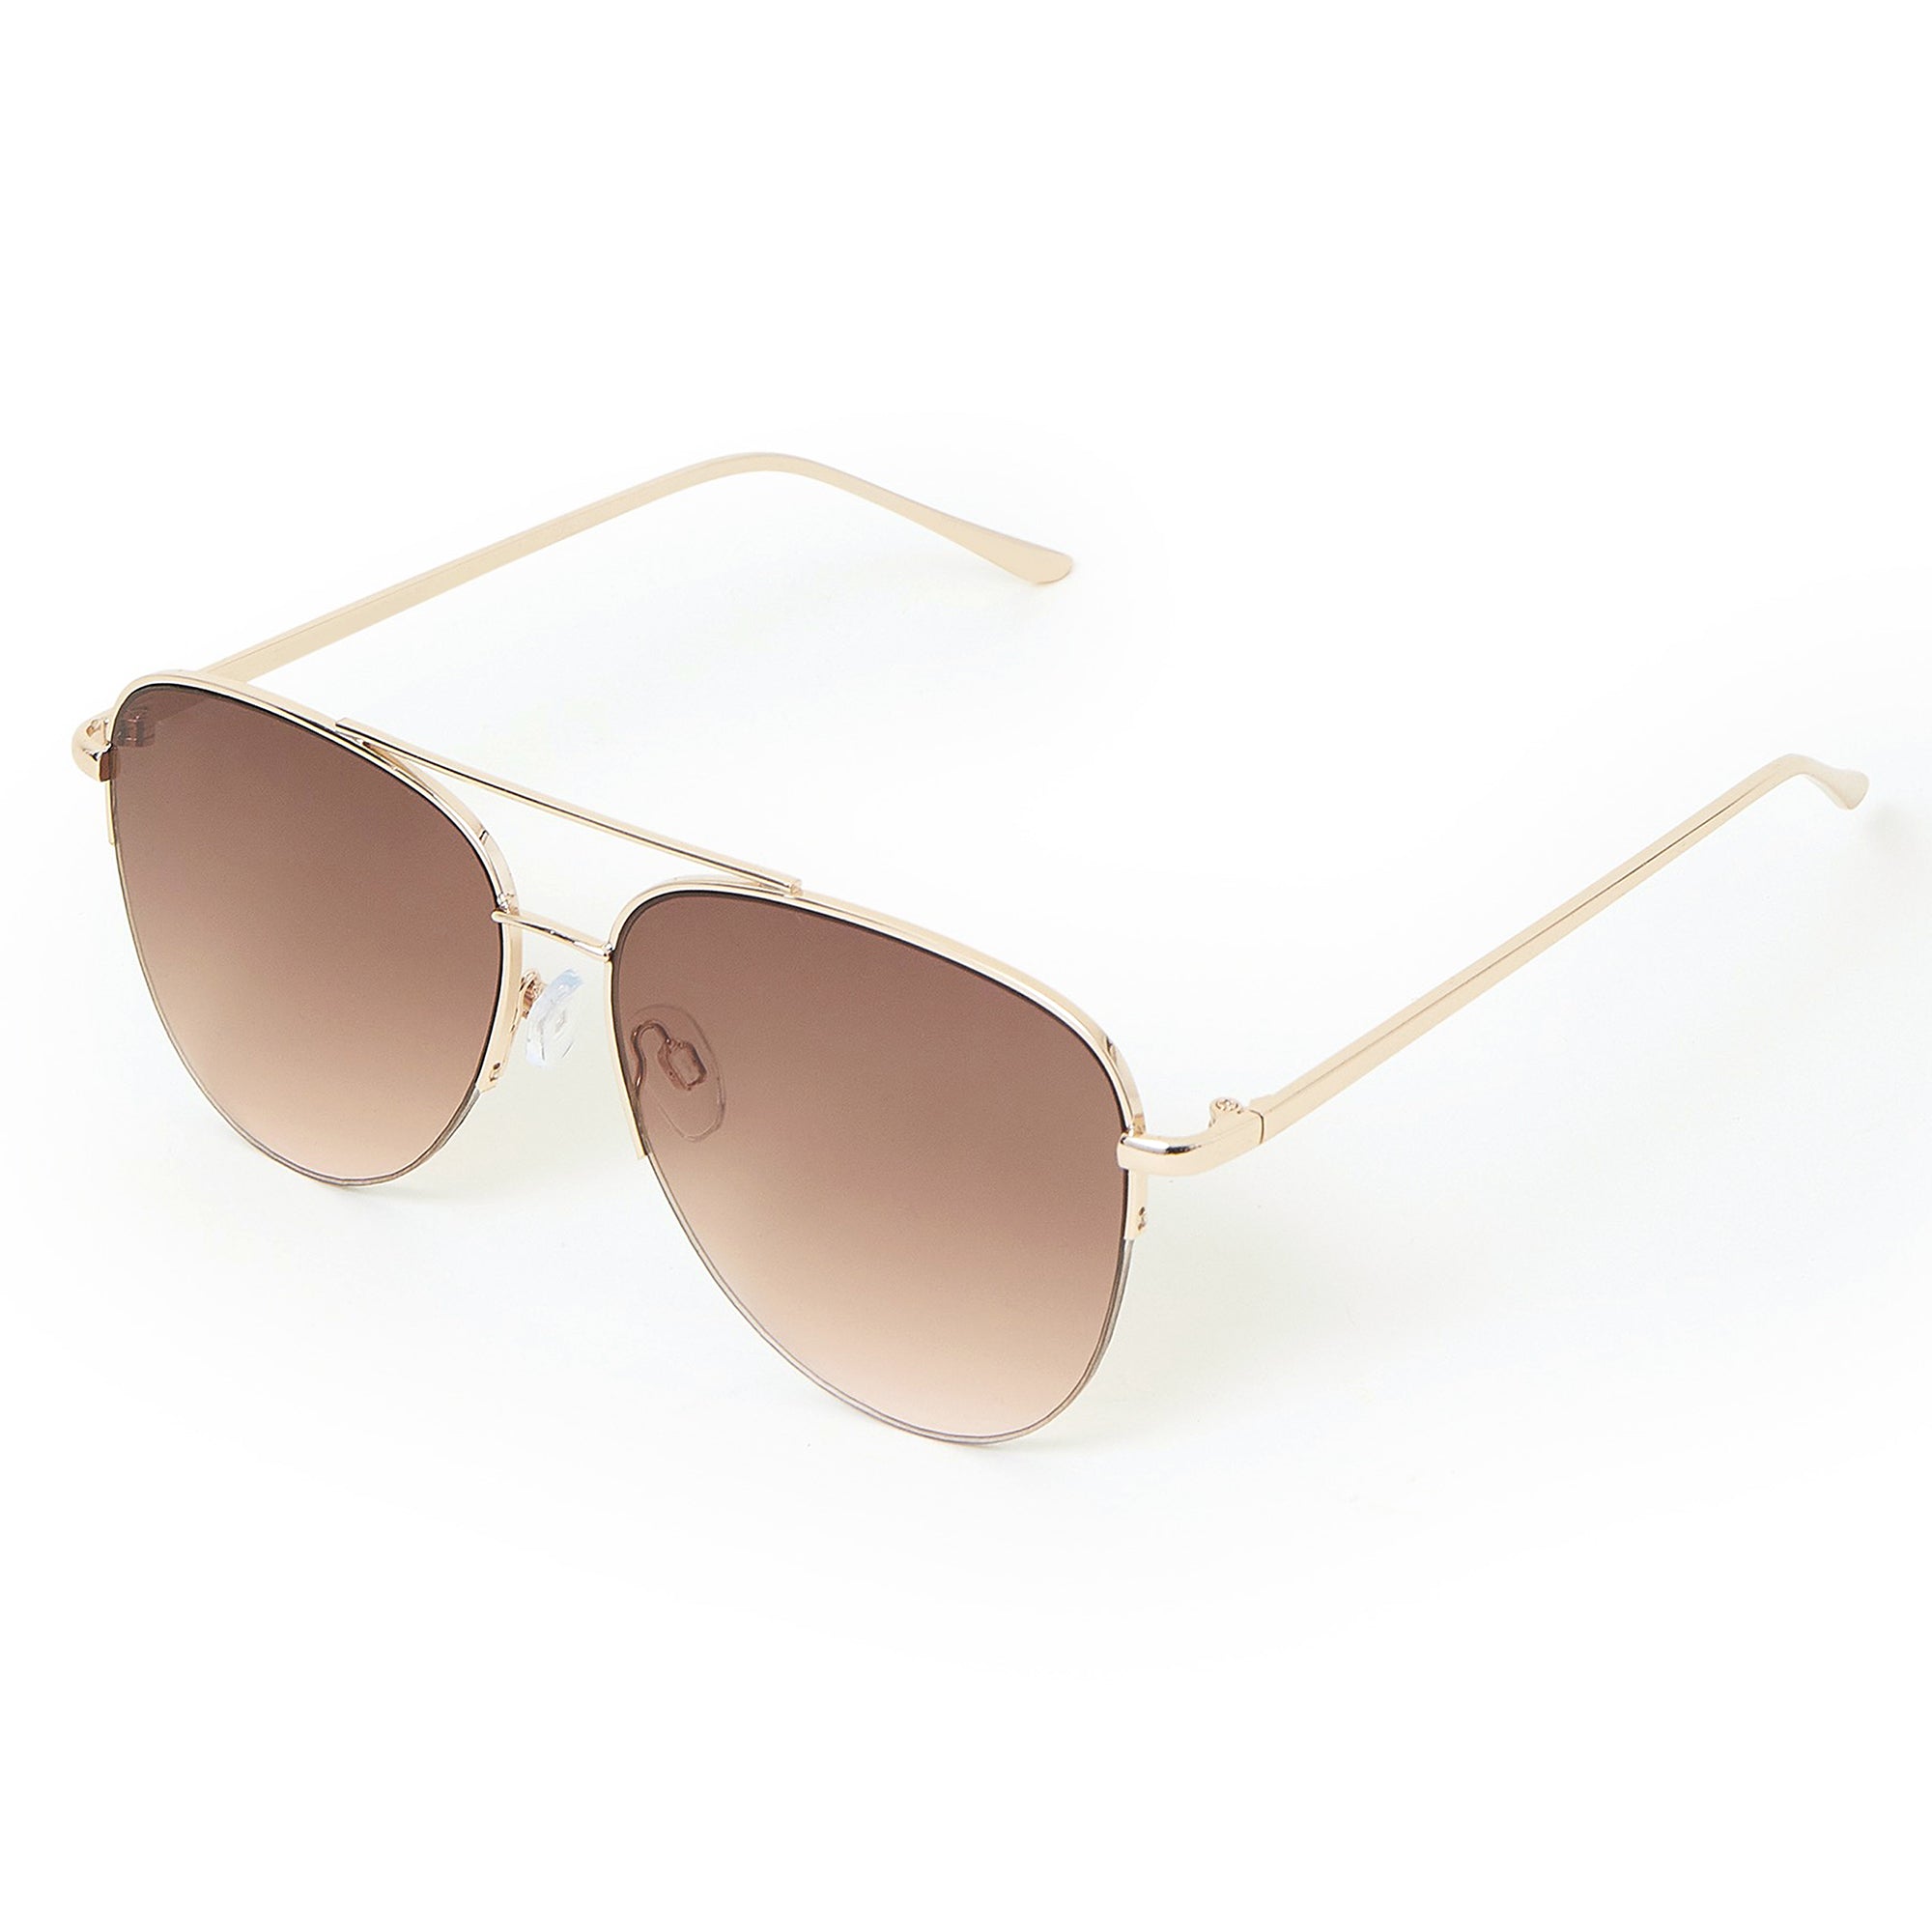 Accessorize London Women's Gold Half Frame Aviator Sunglasses